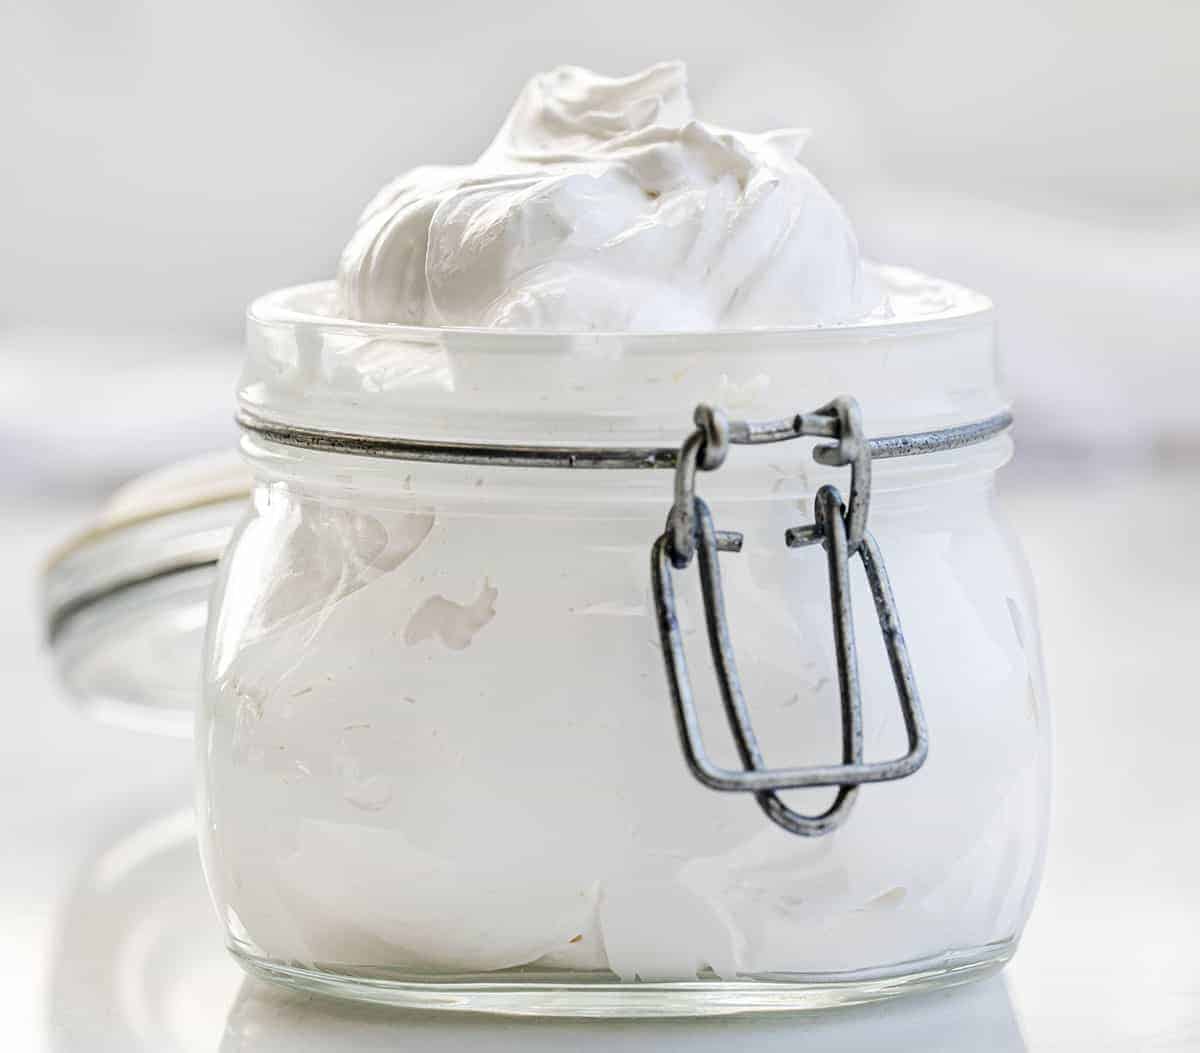 Jar of Homemade Marshmallow Fluff on White Counter